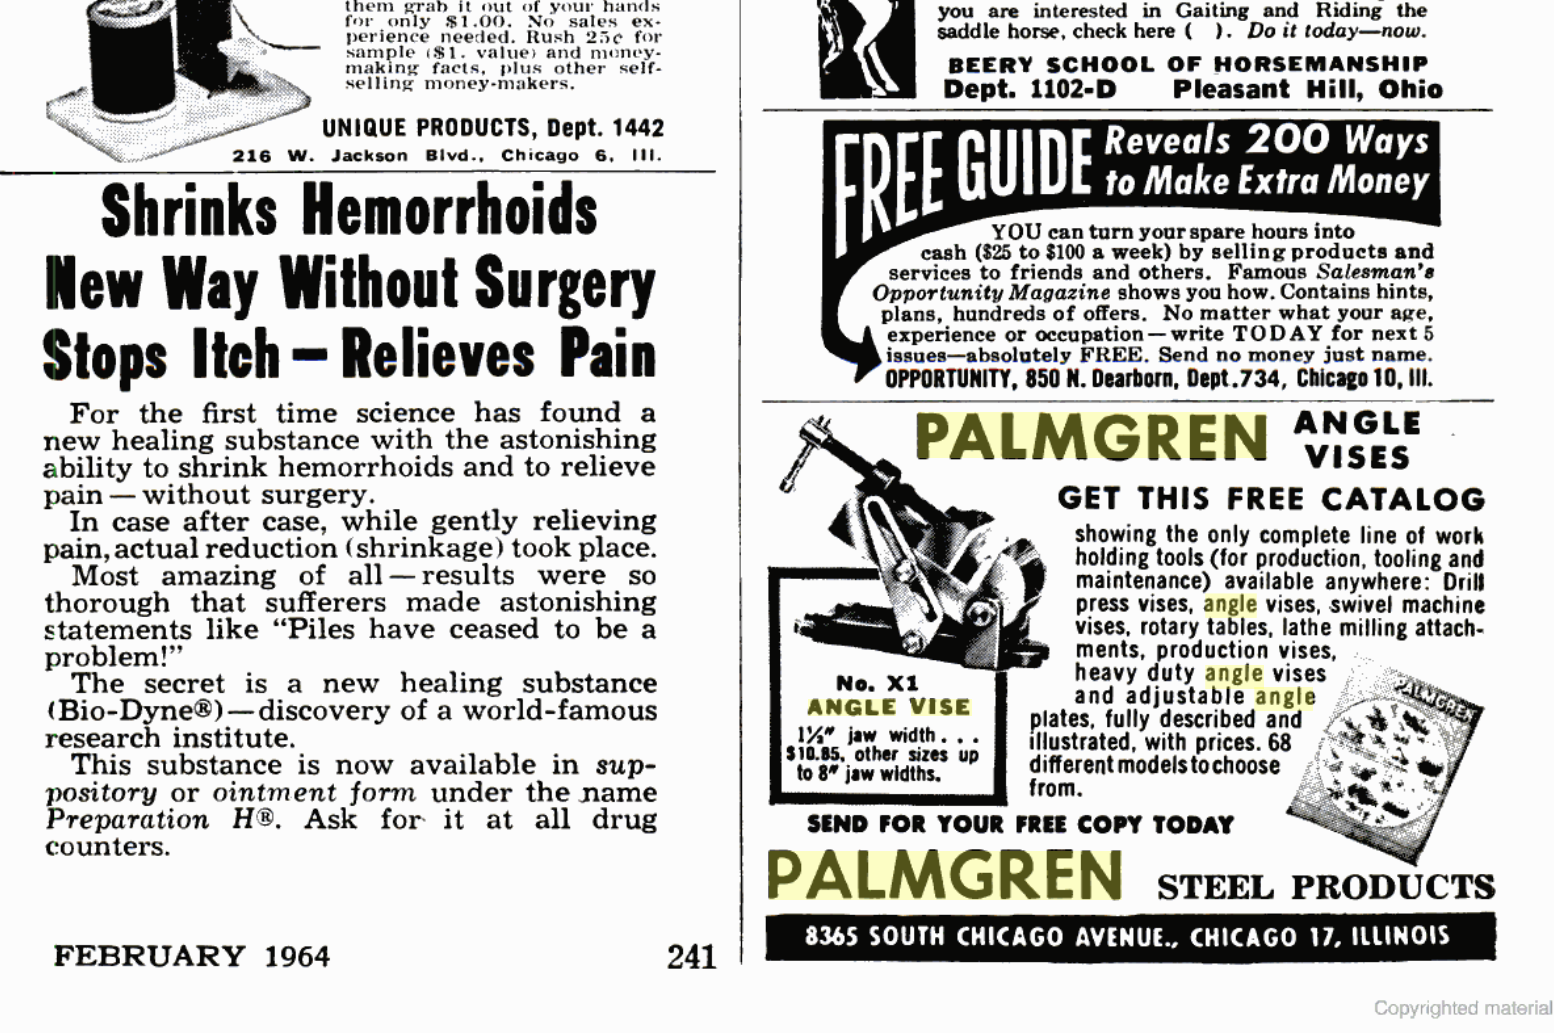 Palmgren Angle Vise Ad Popular Mechanics Magazine 1964 copy.png